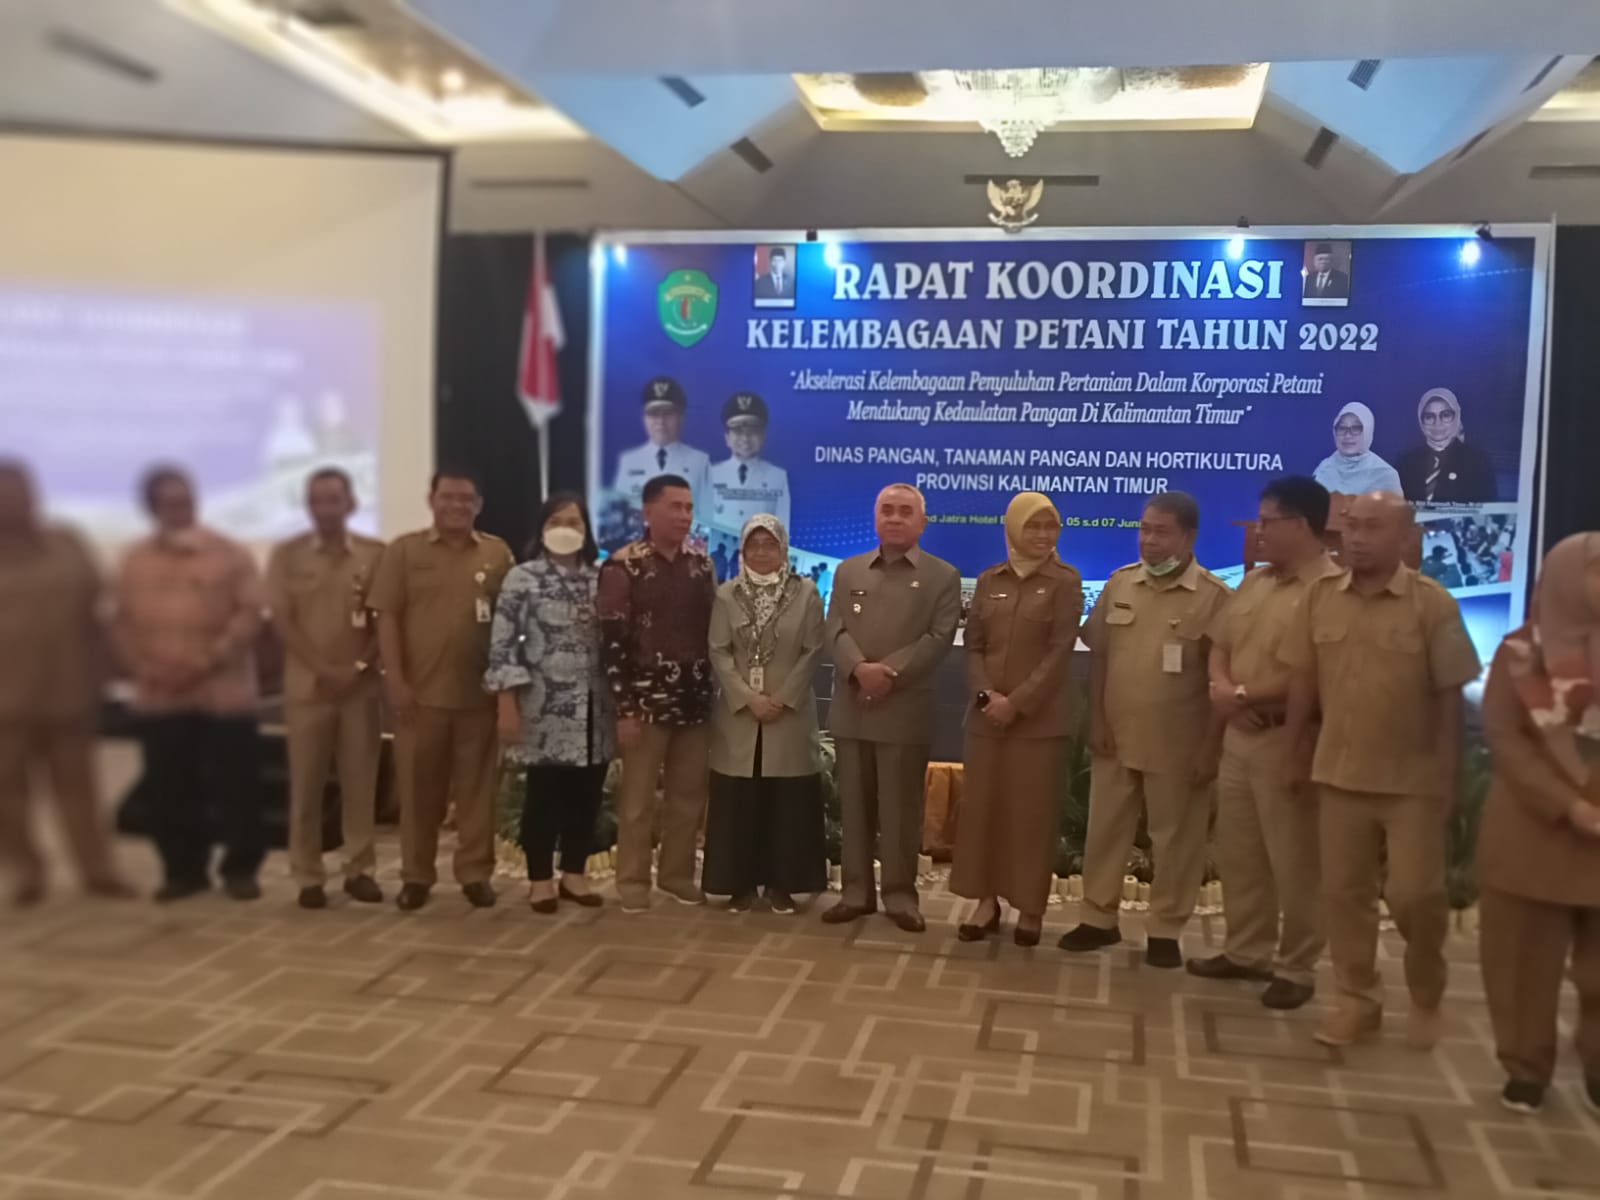 Rapat koordinasi akselerasi kelembagaan penyuluhan pertanian dalam mendukung kedaulatan pangan di Provinsi Kalimantan Timur